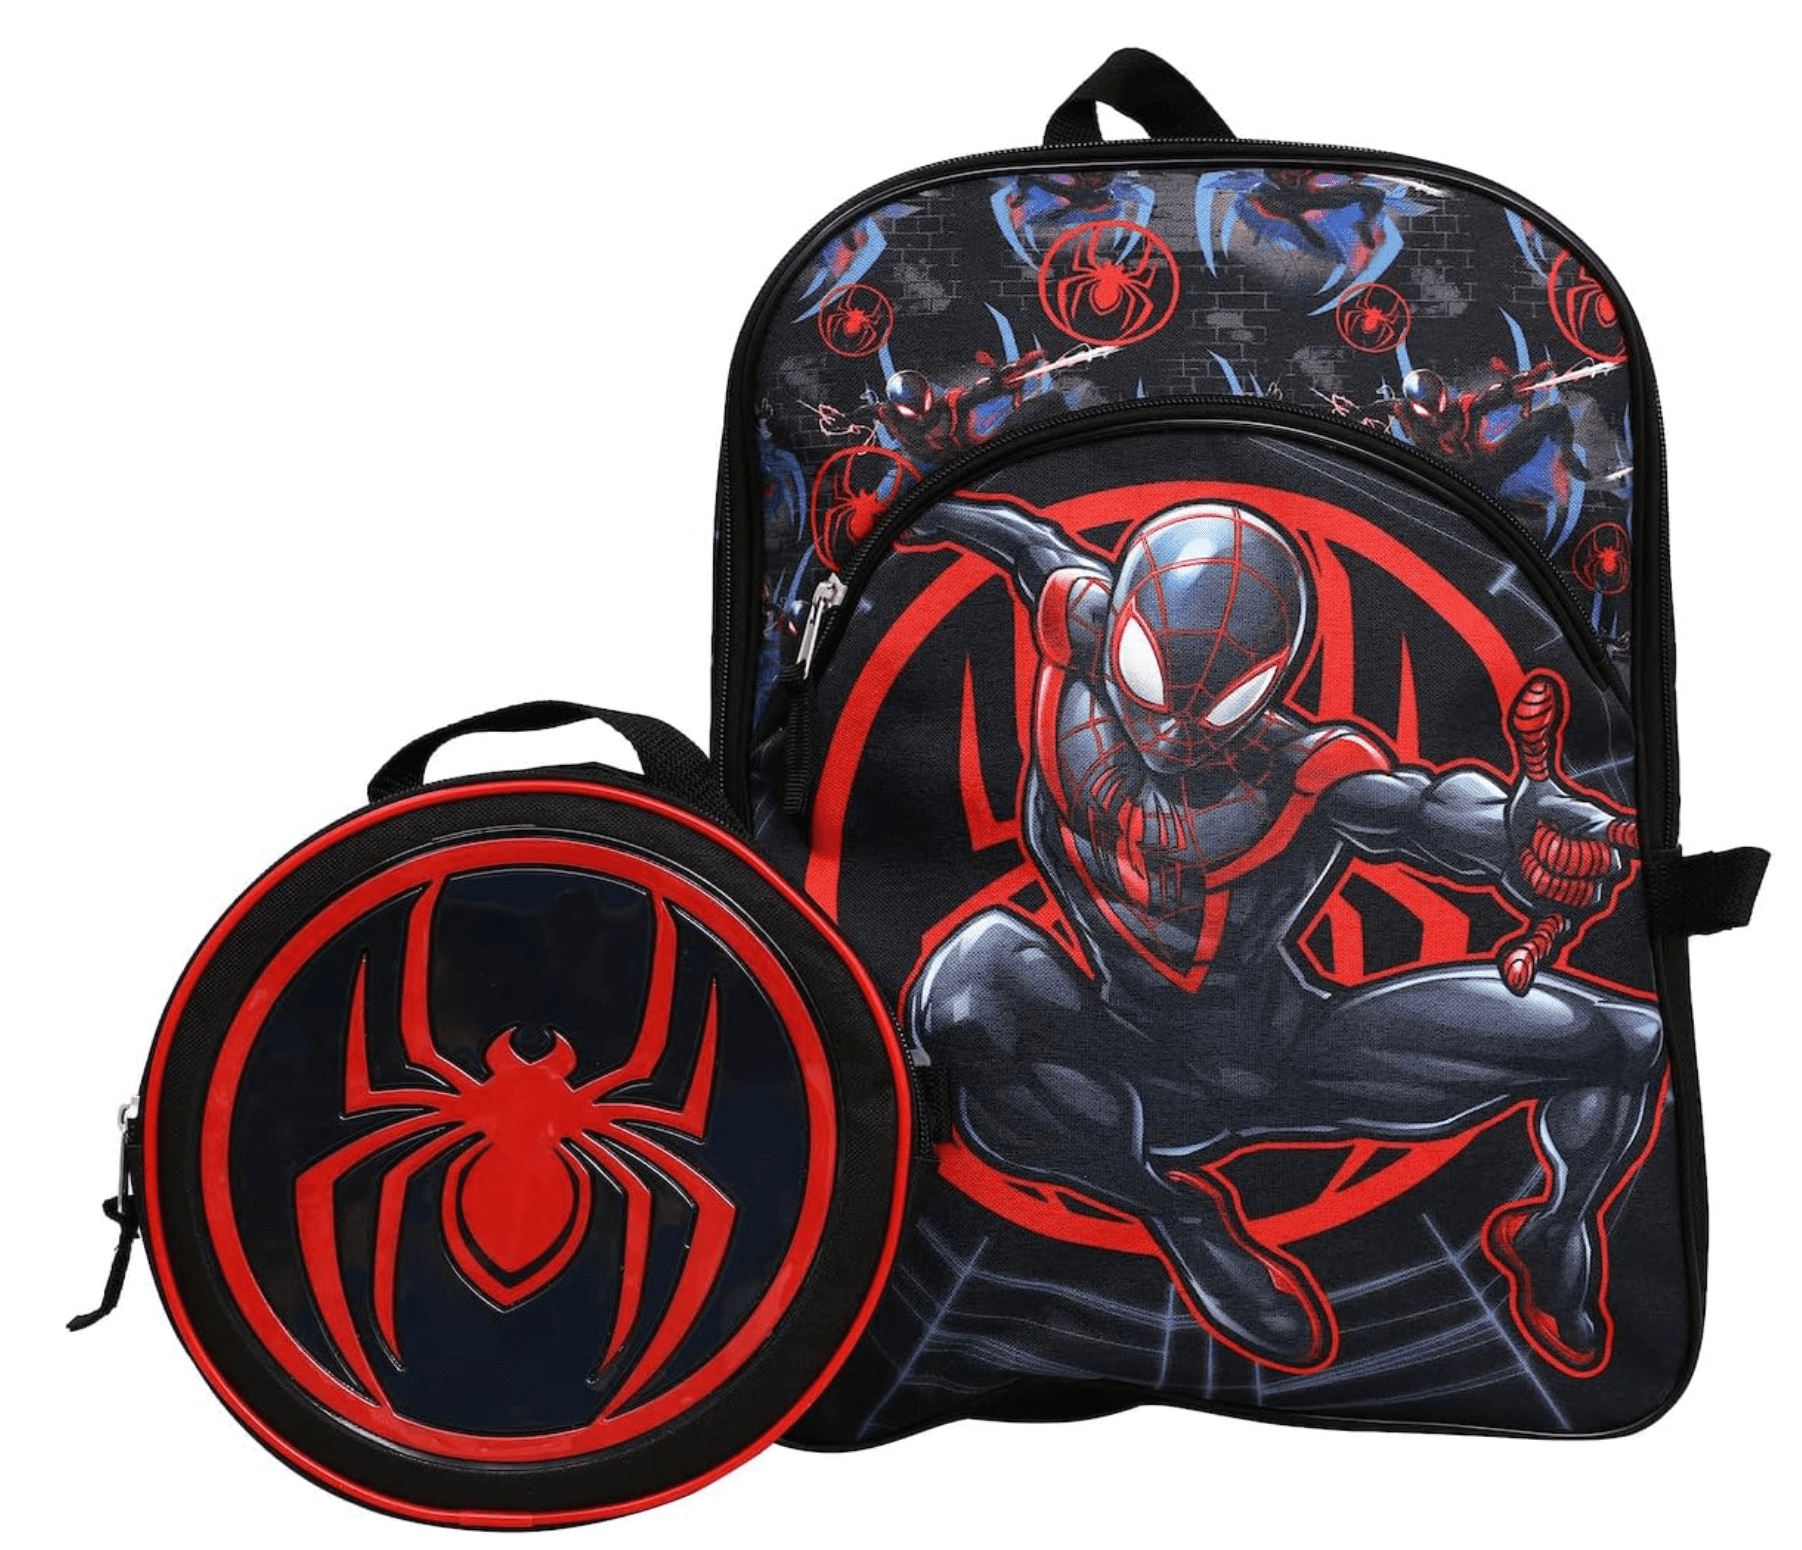 Yoobi x Marvel Spider-Man Red Adult Scissors- Spider Man Scissors